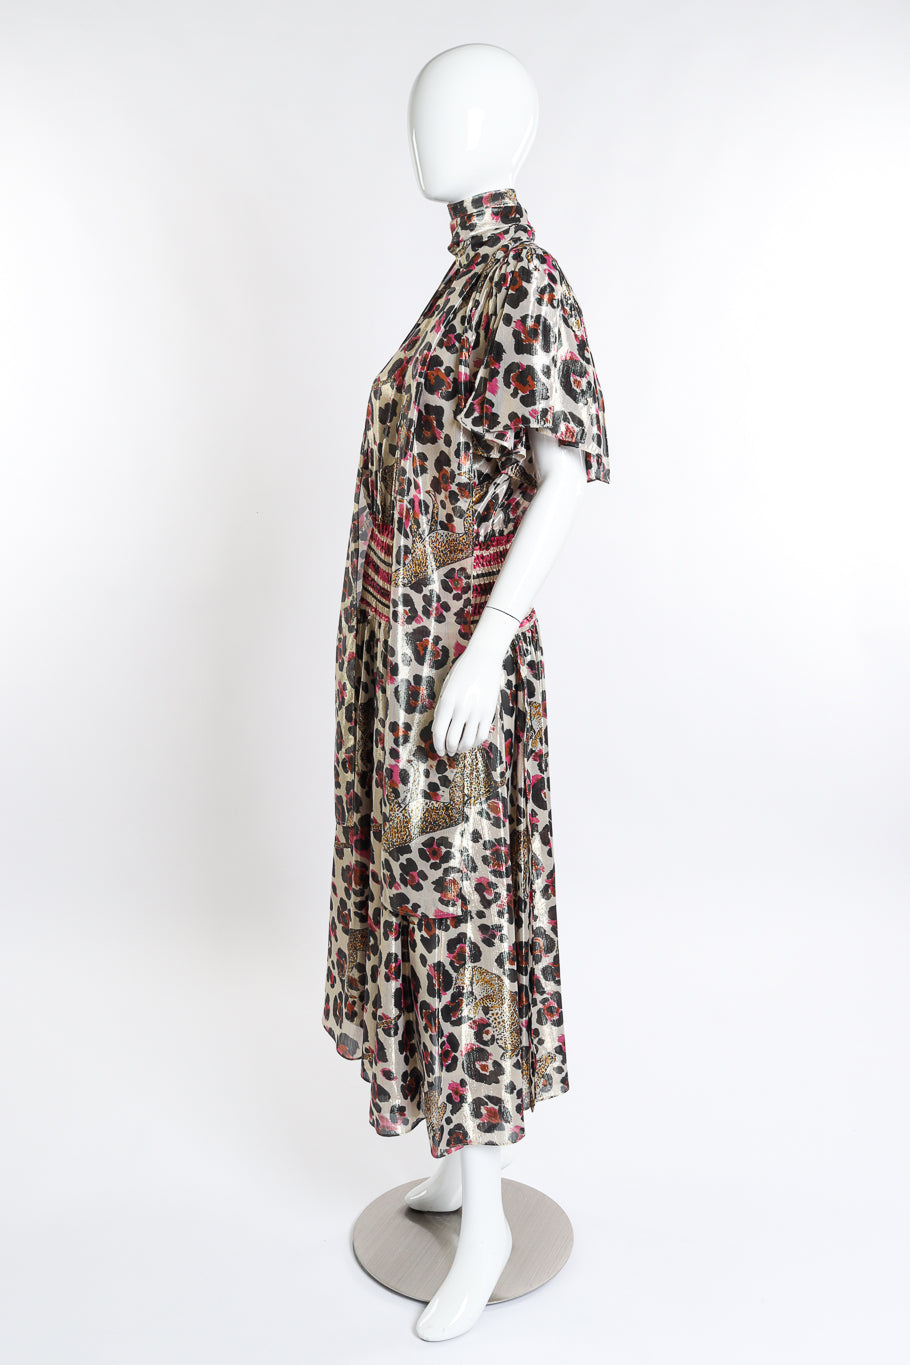 Vintage Diane Freis Metallic Animal Cheetah Dress side on mannequin with sash tied at neck @recess la